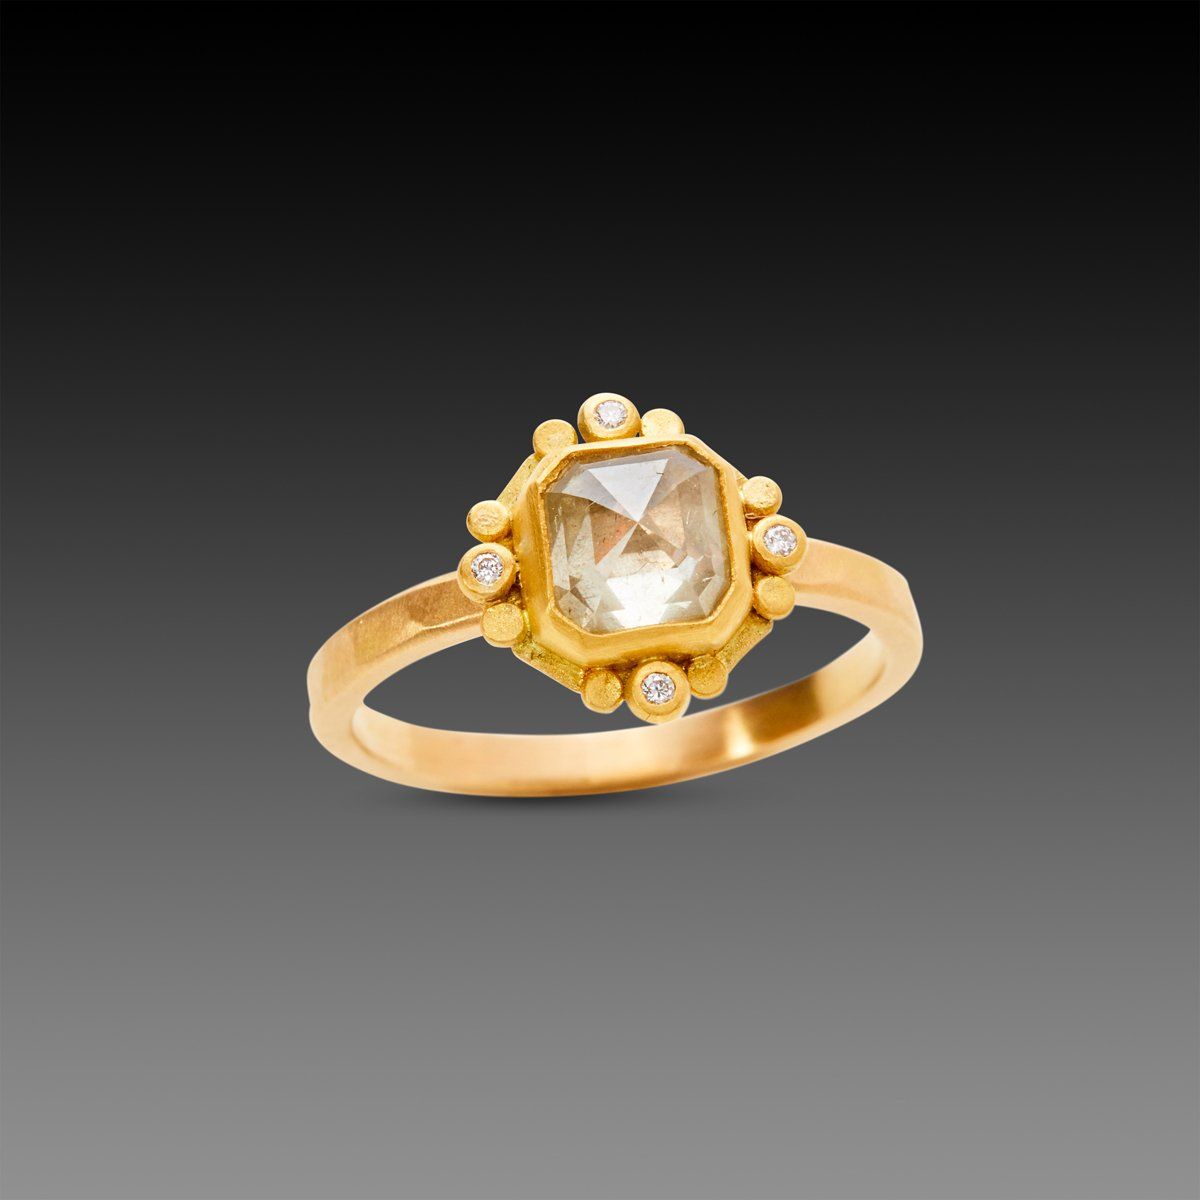 Buy VDesign 1 Carat Diamond Ring For Women 1 ct Diamond Gold Ring Original  Certified By IGL International Gemstone Laboratory Diamond Ring For Women 22k  Gold Pure at Amazon.in